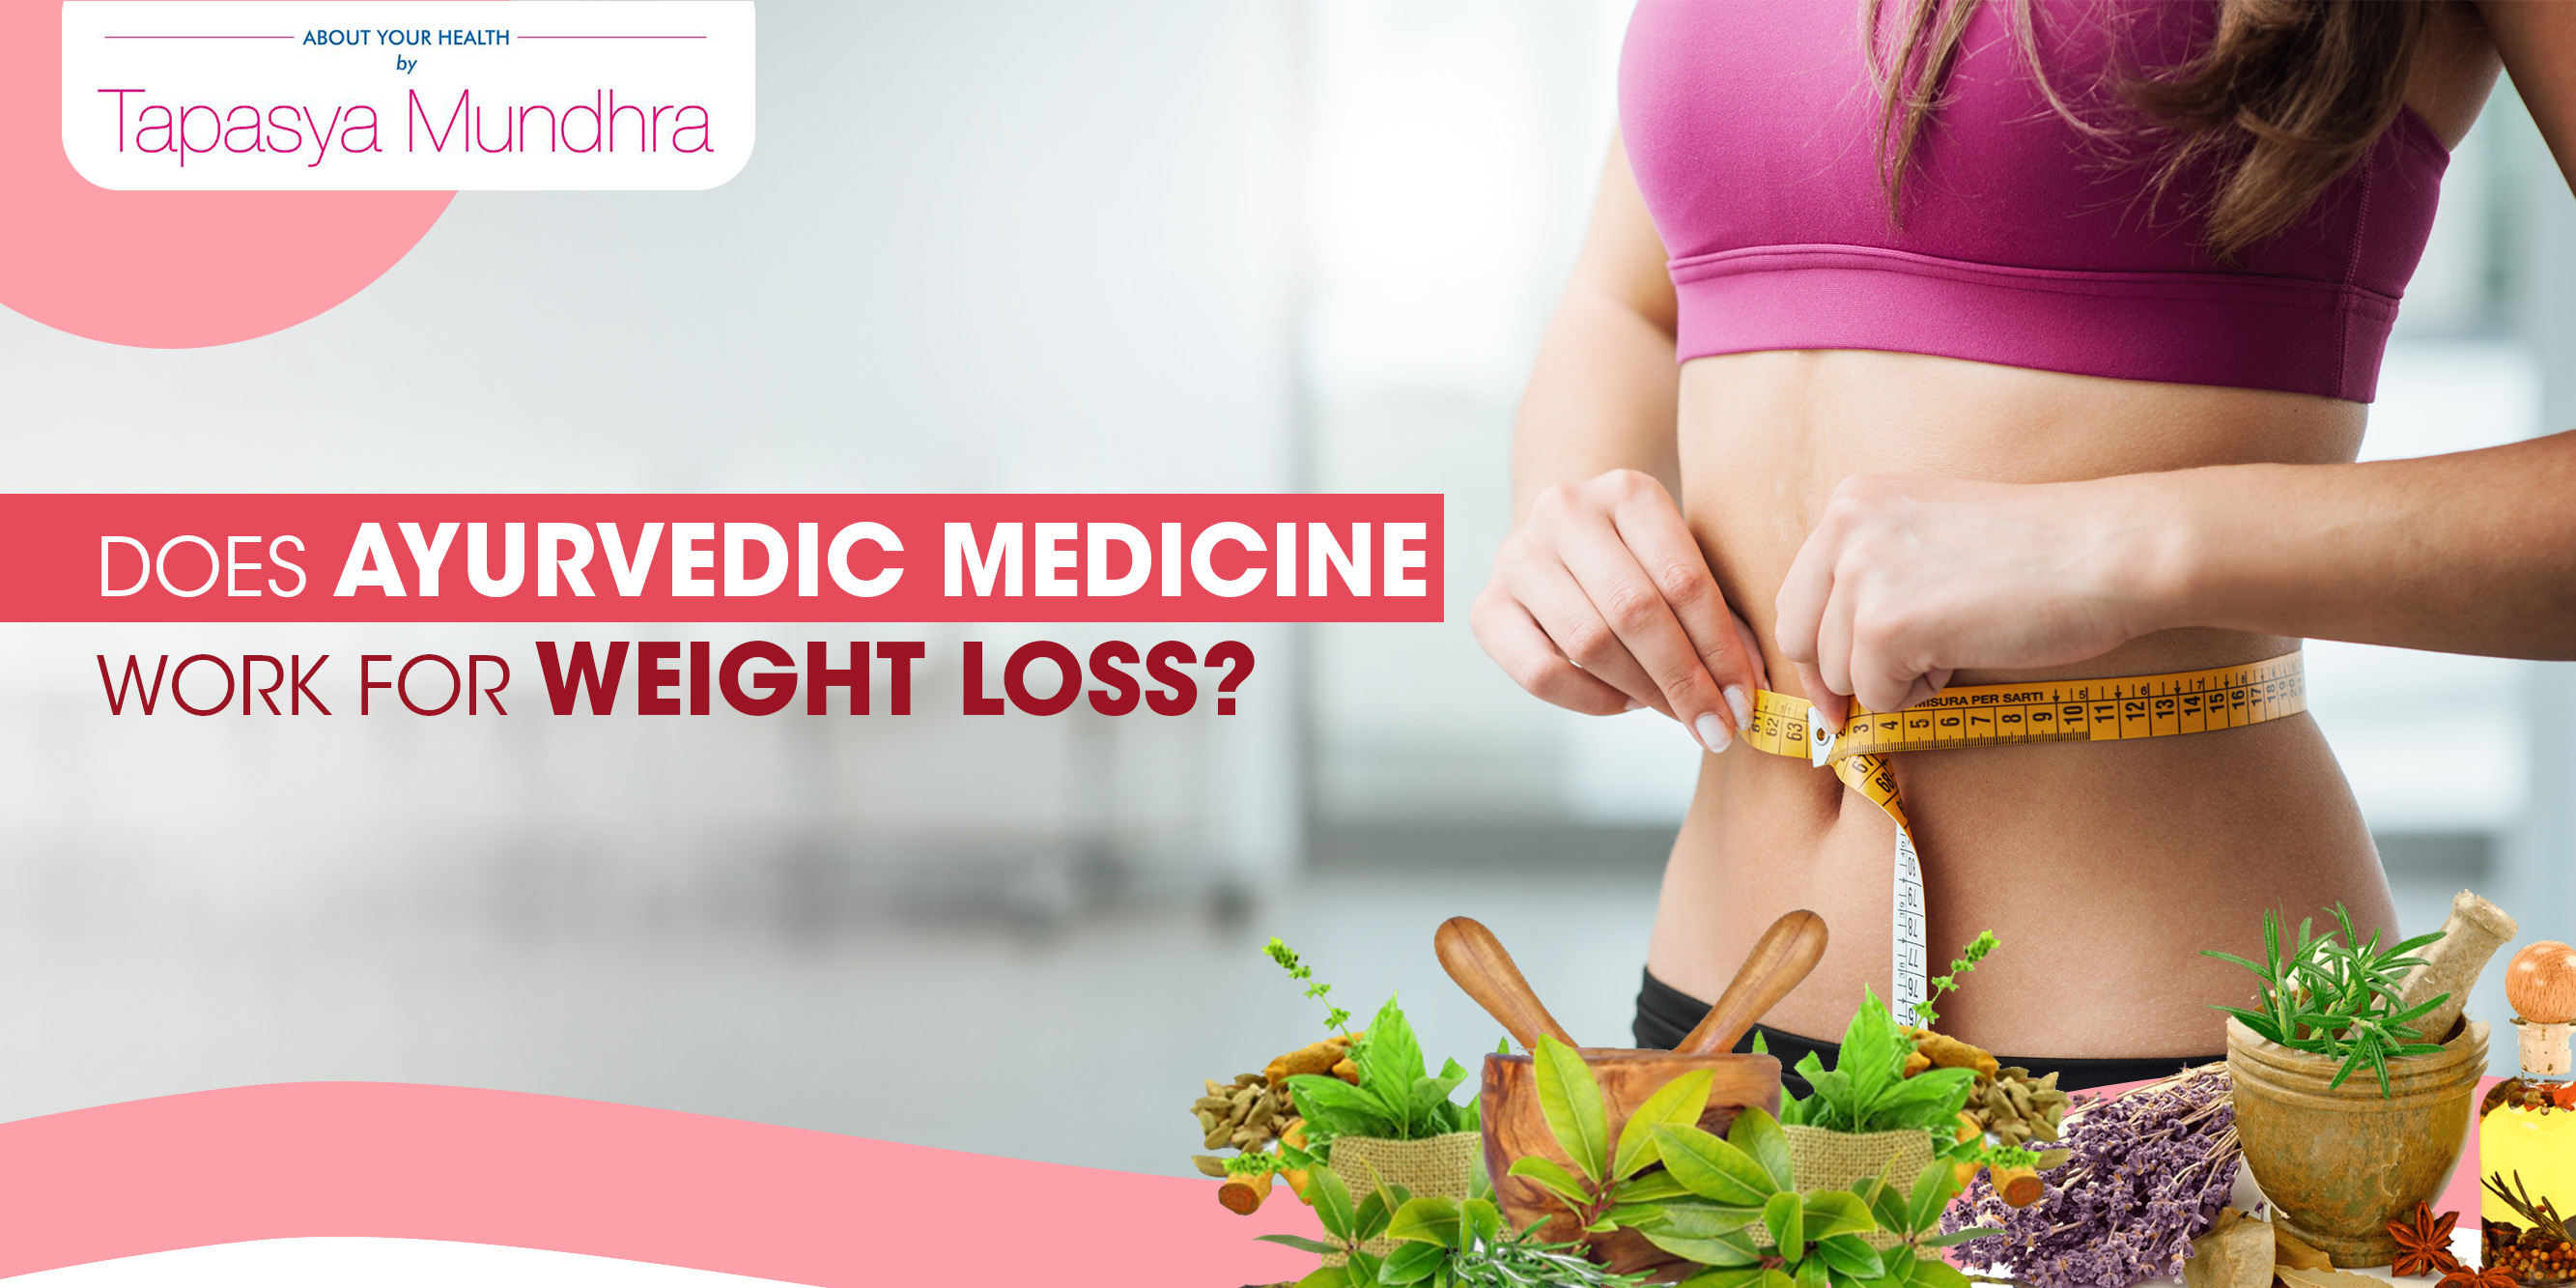 Ayurvedic medicine work for weight loss